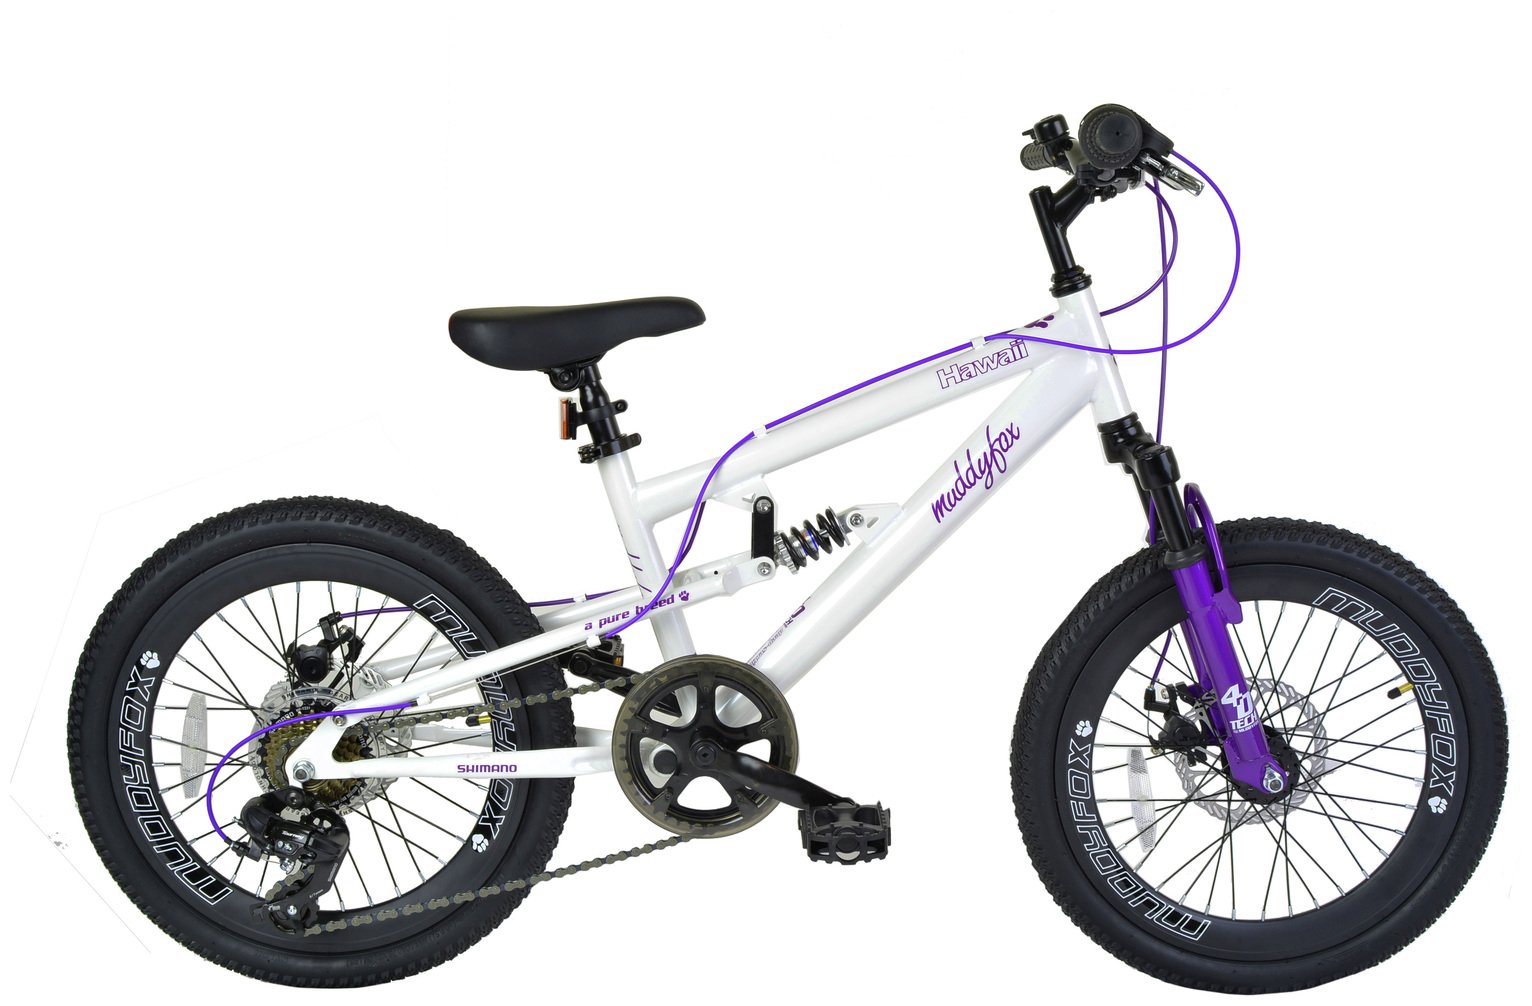 20 inch dual suspension mountain bike